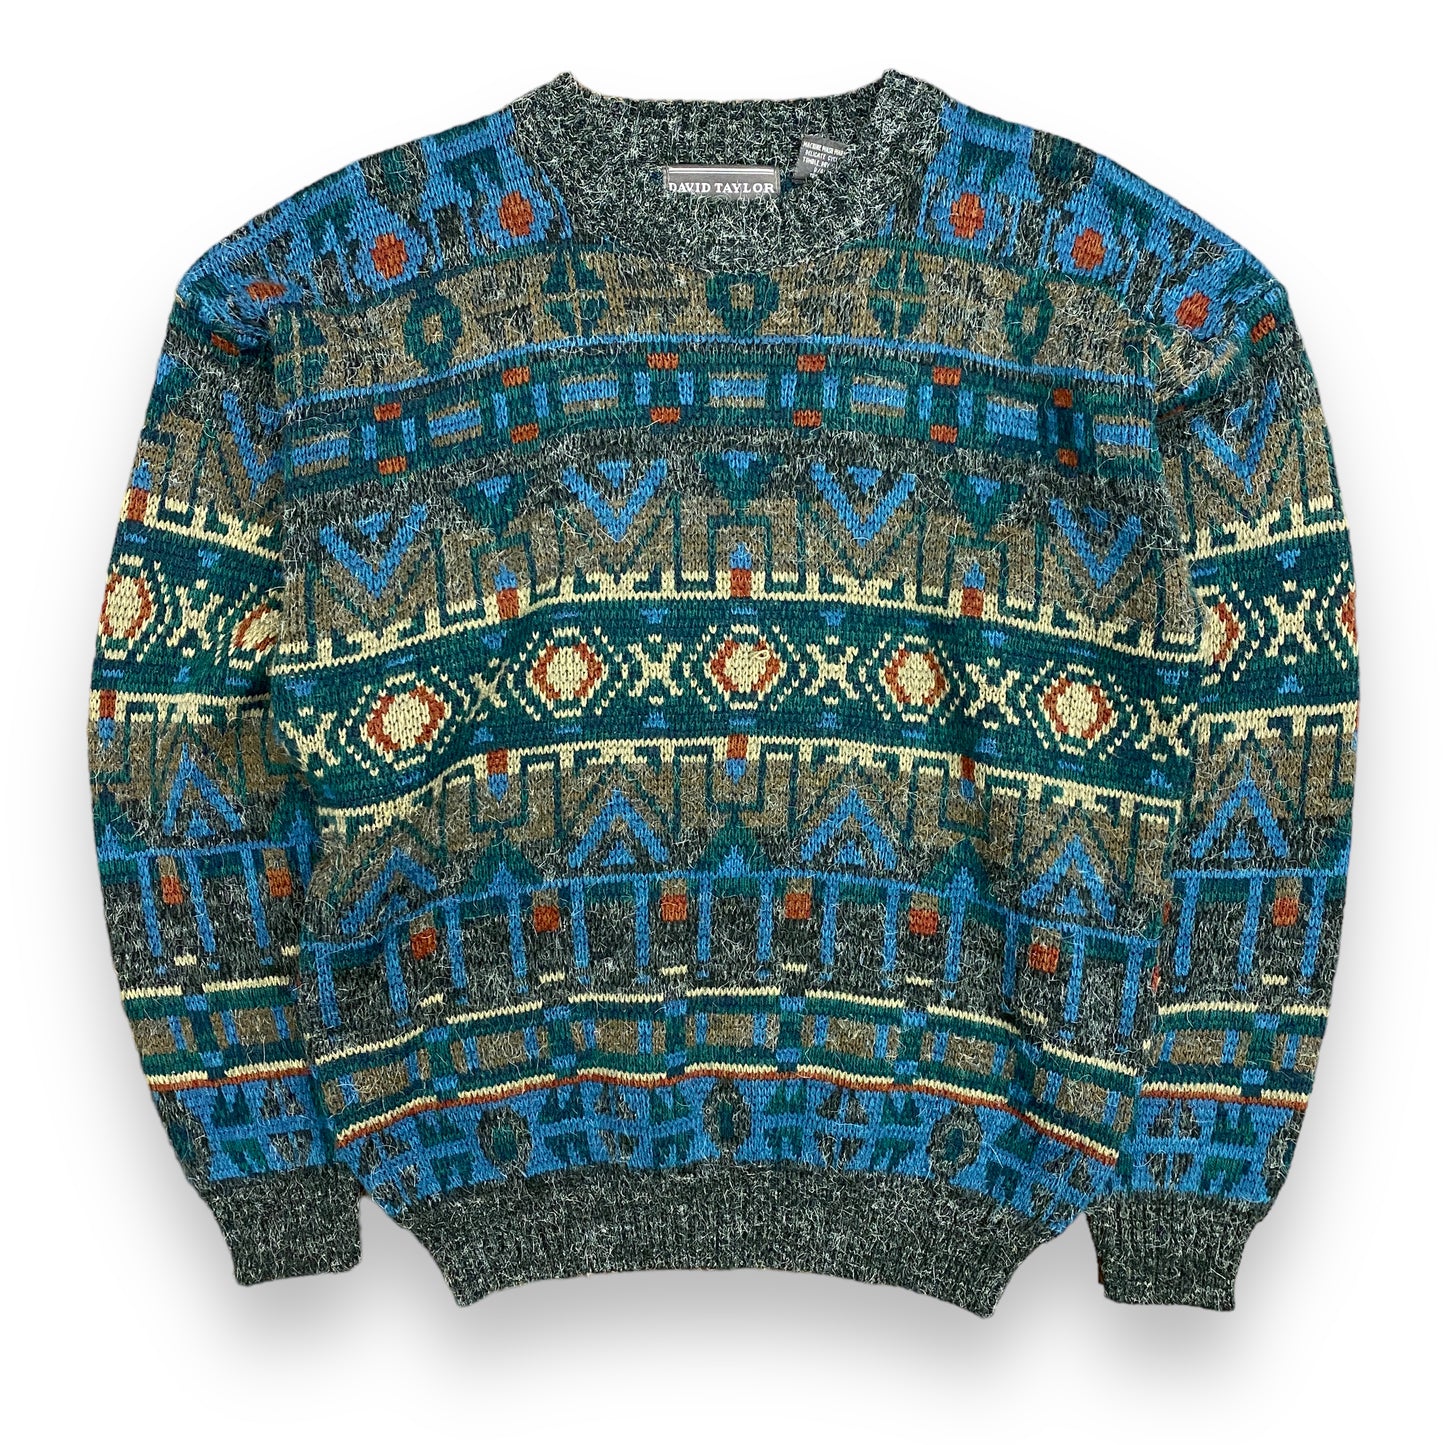 Vintage 1980s David Taylor Shaggy Knit Sweater - Size Medium